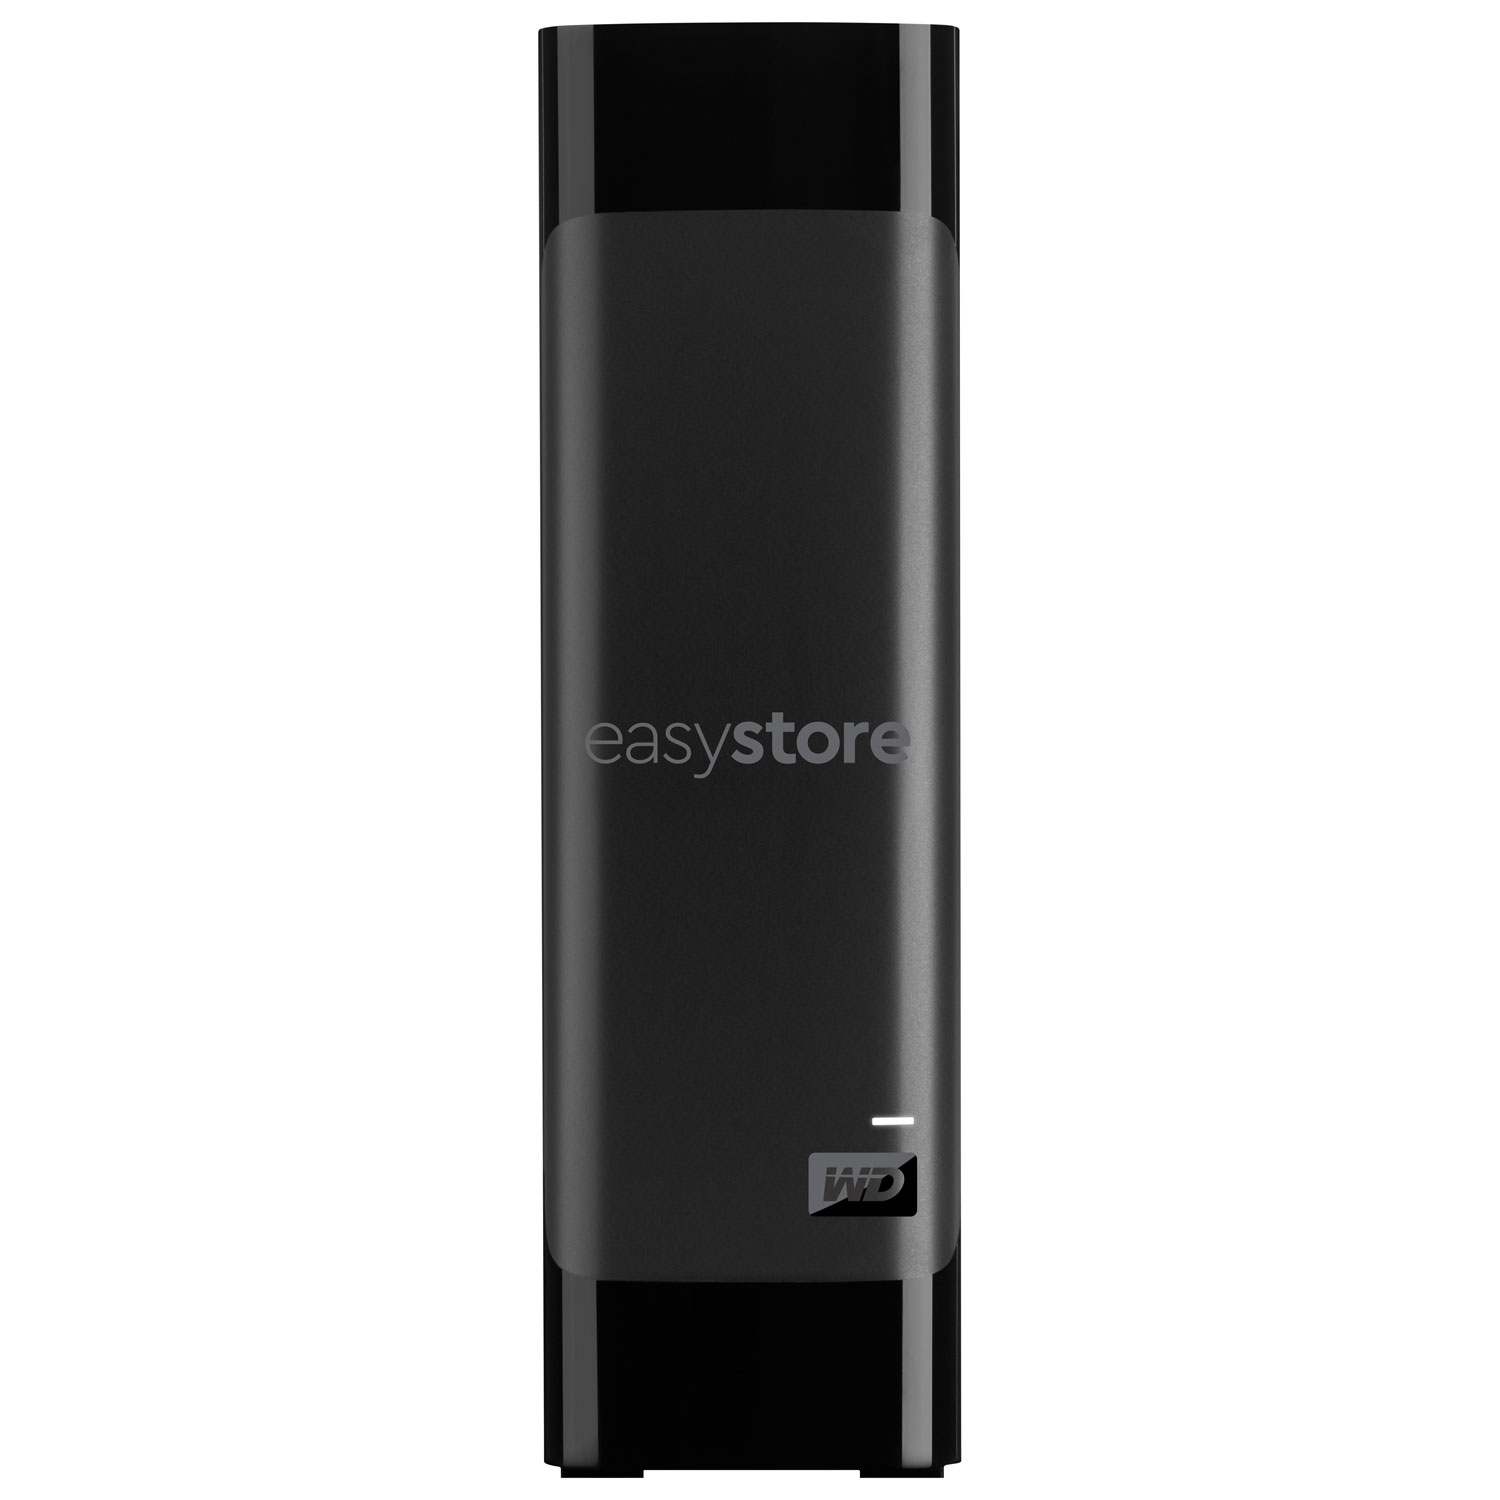 WD easystore 22TB USB 3.0 Desktop External Hard Drive (WDBAMA0220HBK-NESN) - Black